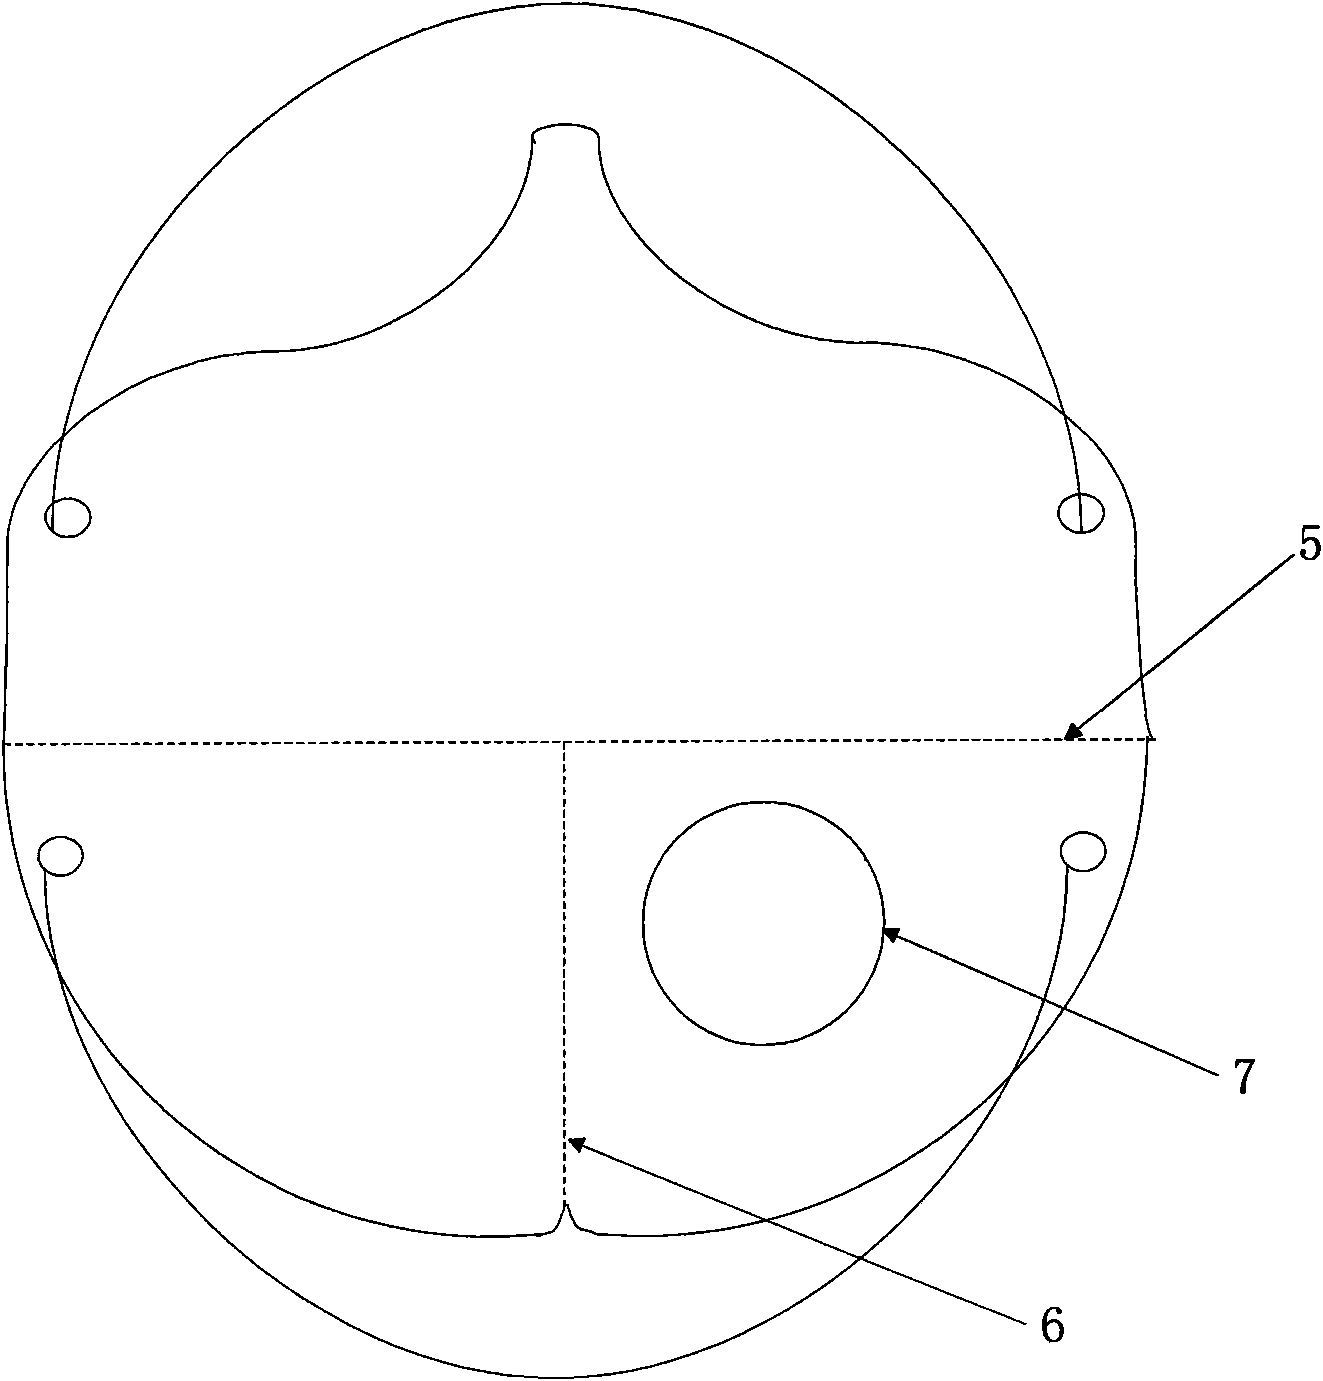 Bowl-shaped three-dimensional folding dustproof mask